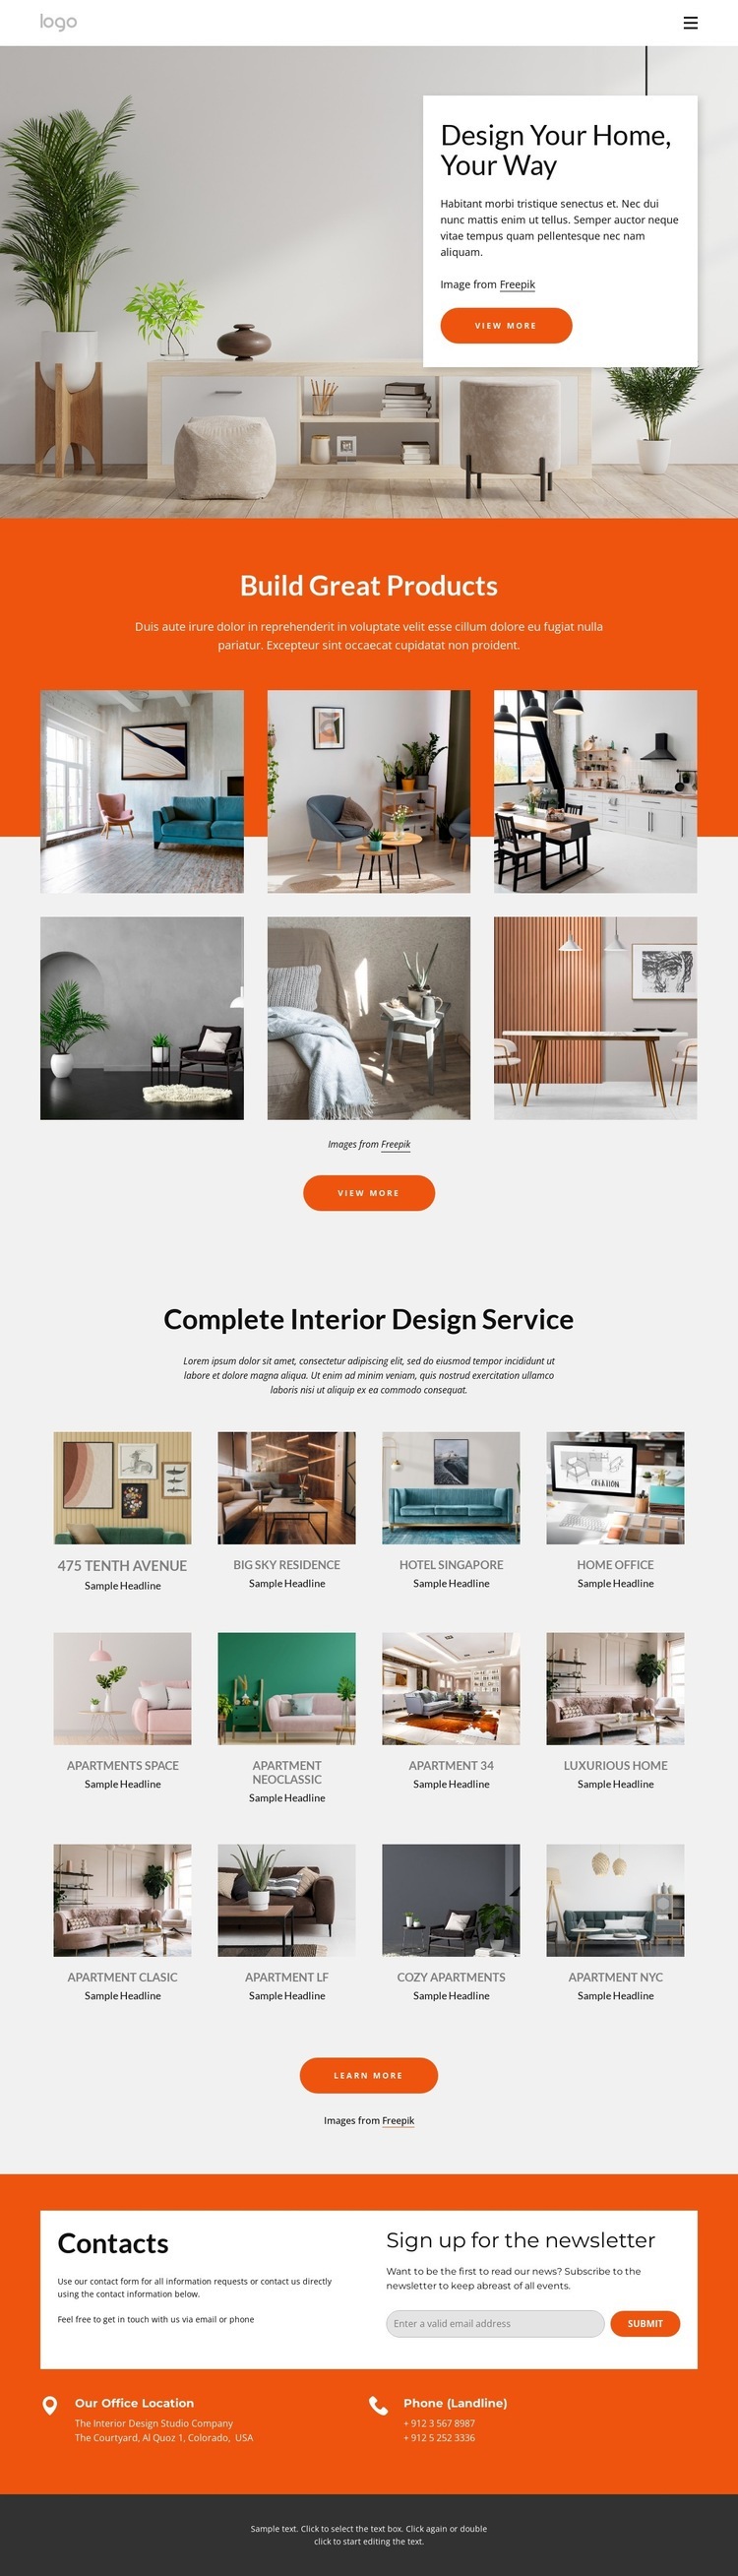 Interior design portfolio Web Page Design